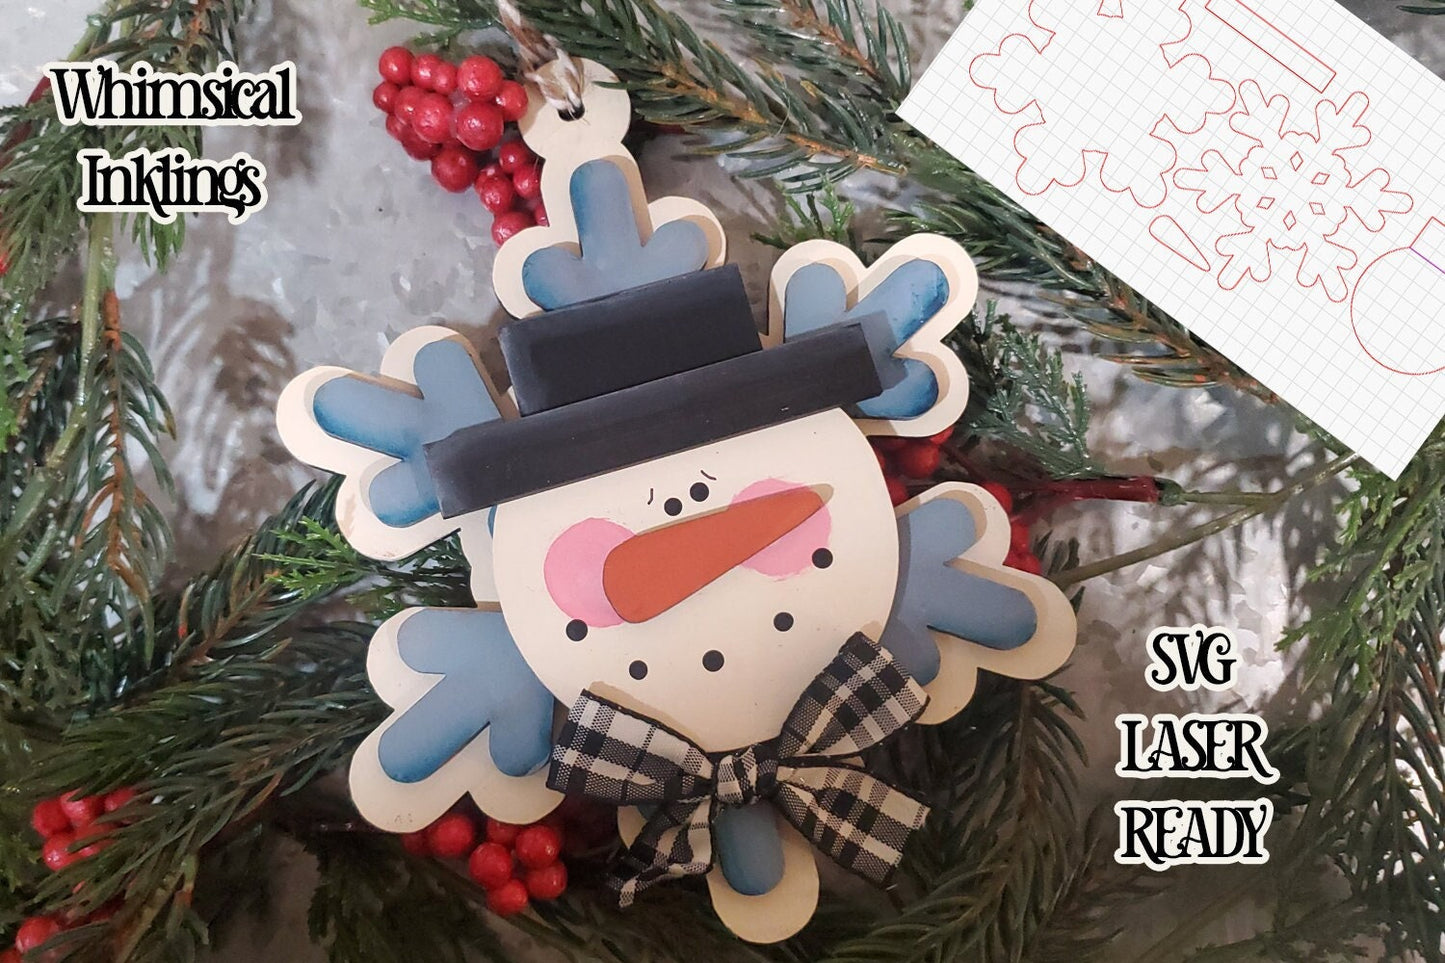 Snowflake Fella Snowman Ornament SVG| Laser Cut Snowman Ornament| Glow forge| Ornament SVG